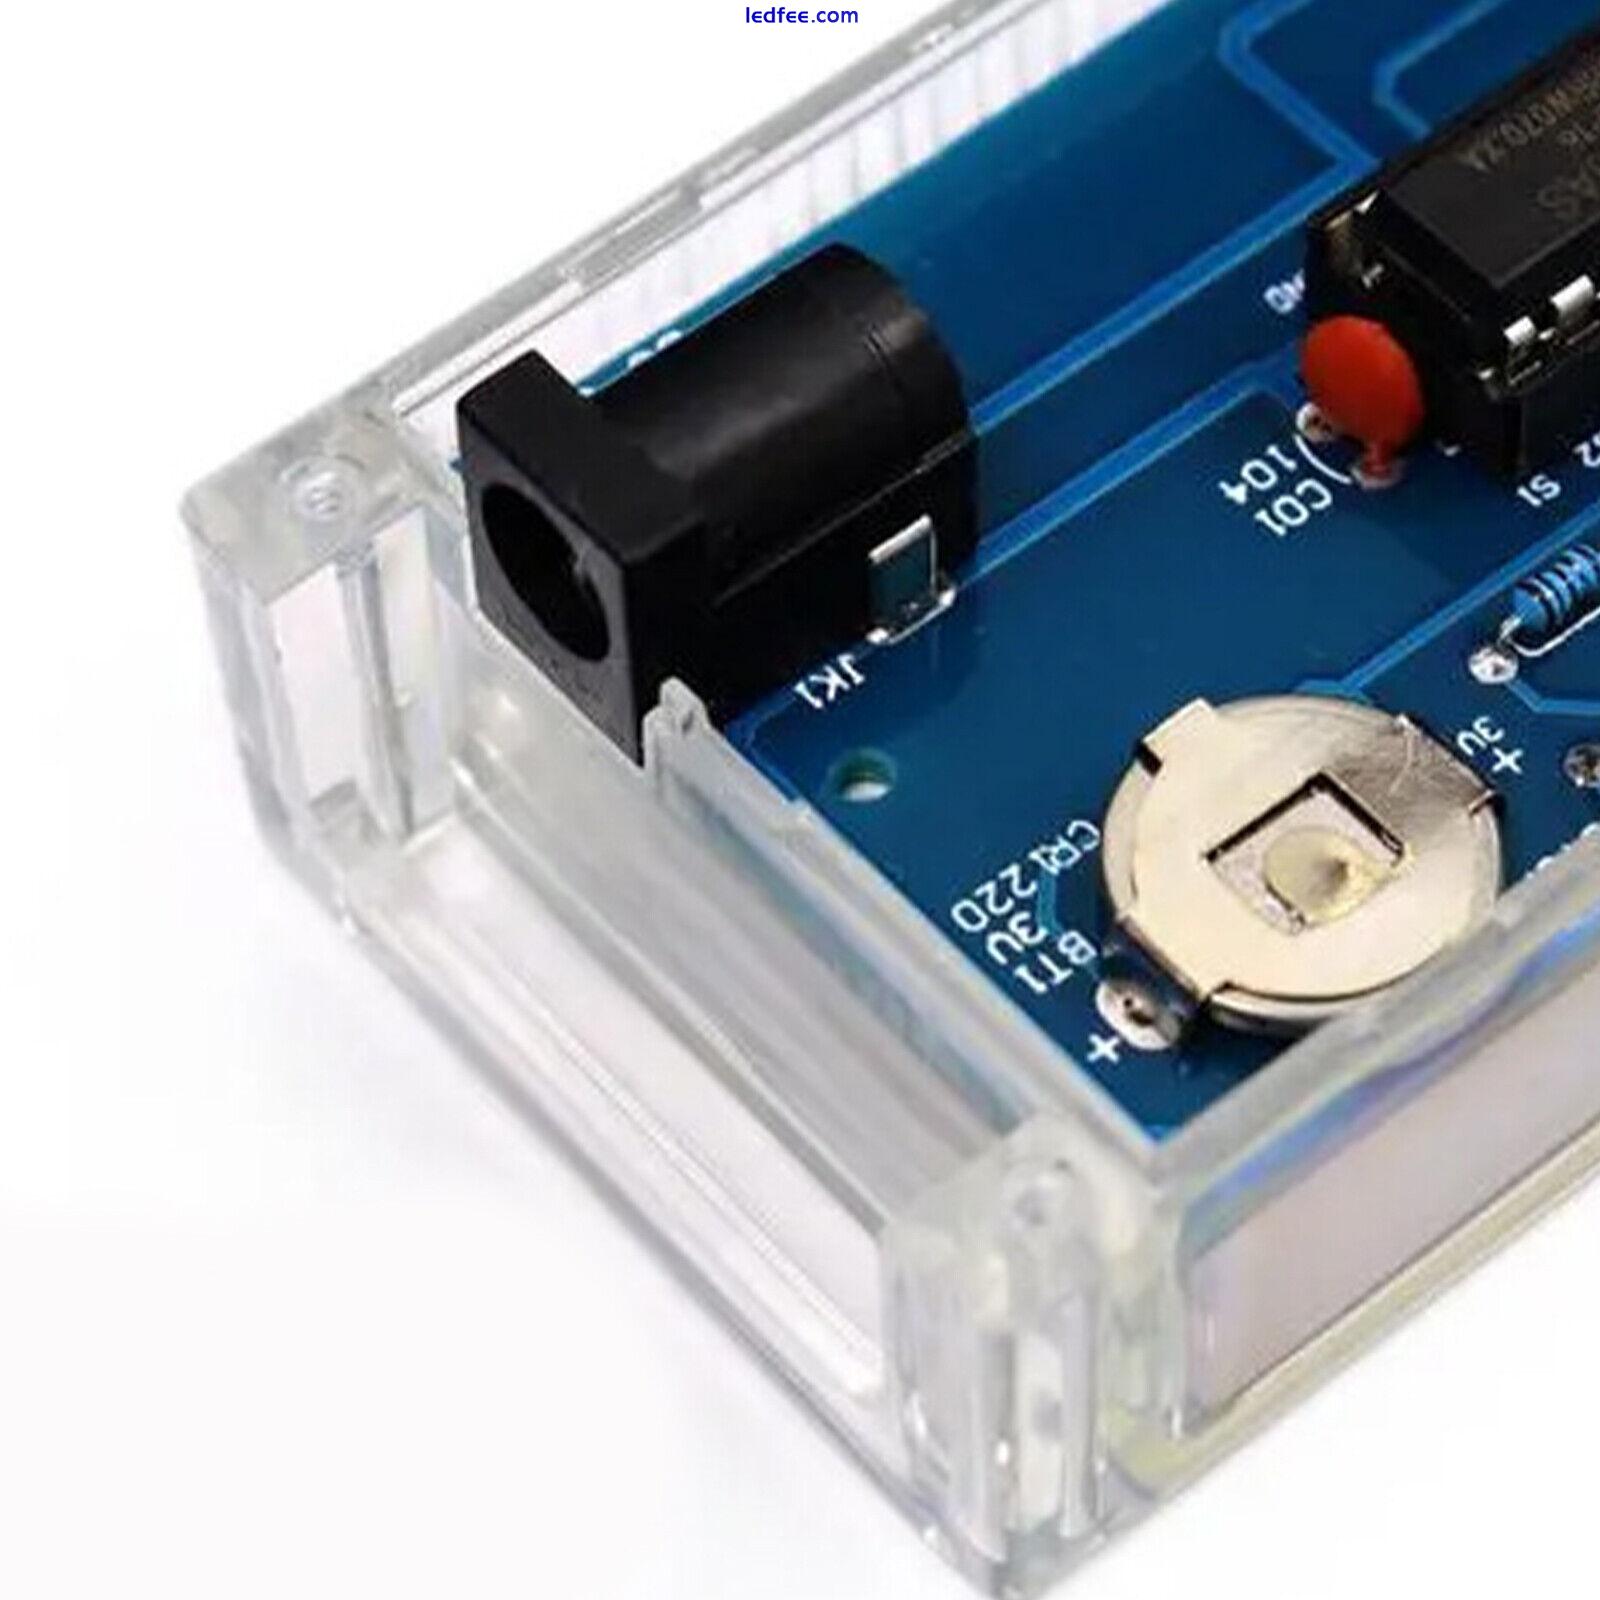 4-LED Digital Electronic Alarm Clock DIY Time Date Temperature and Light Control 4 